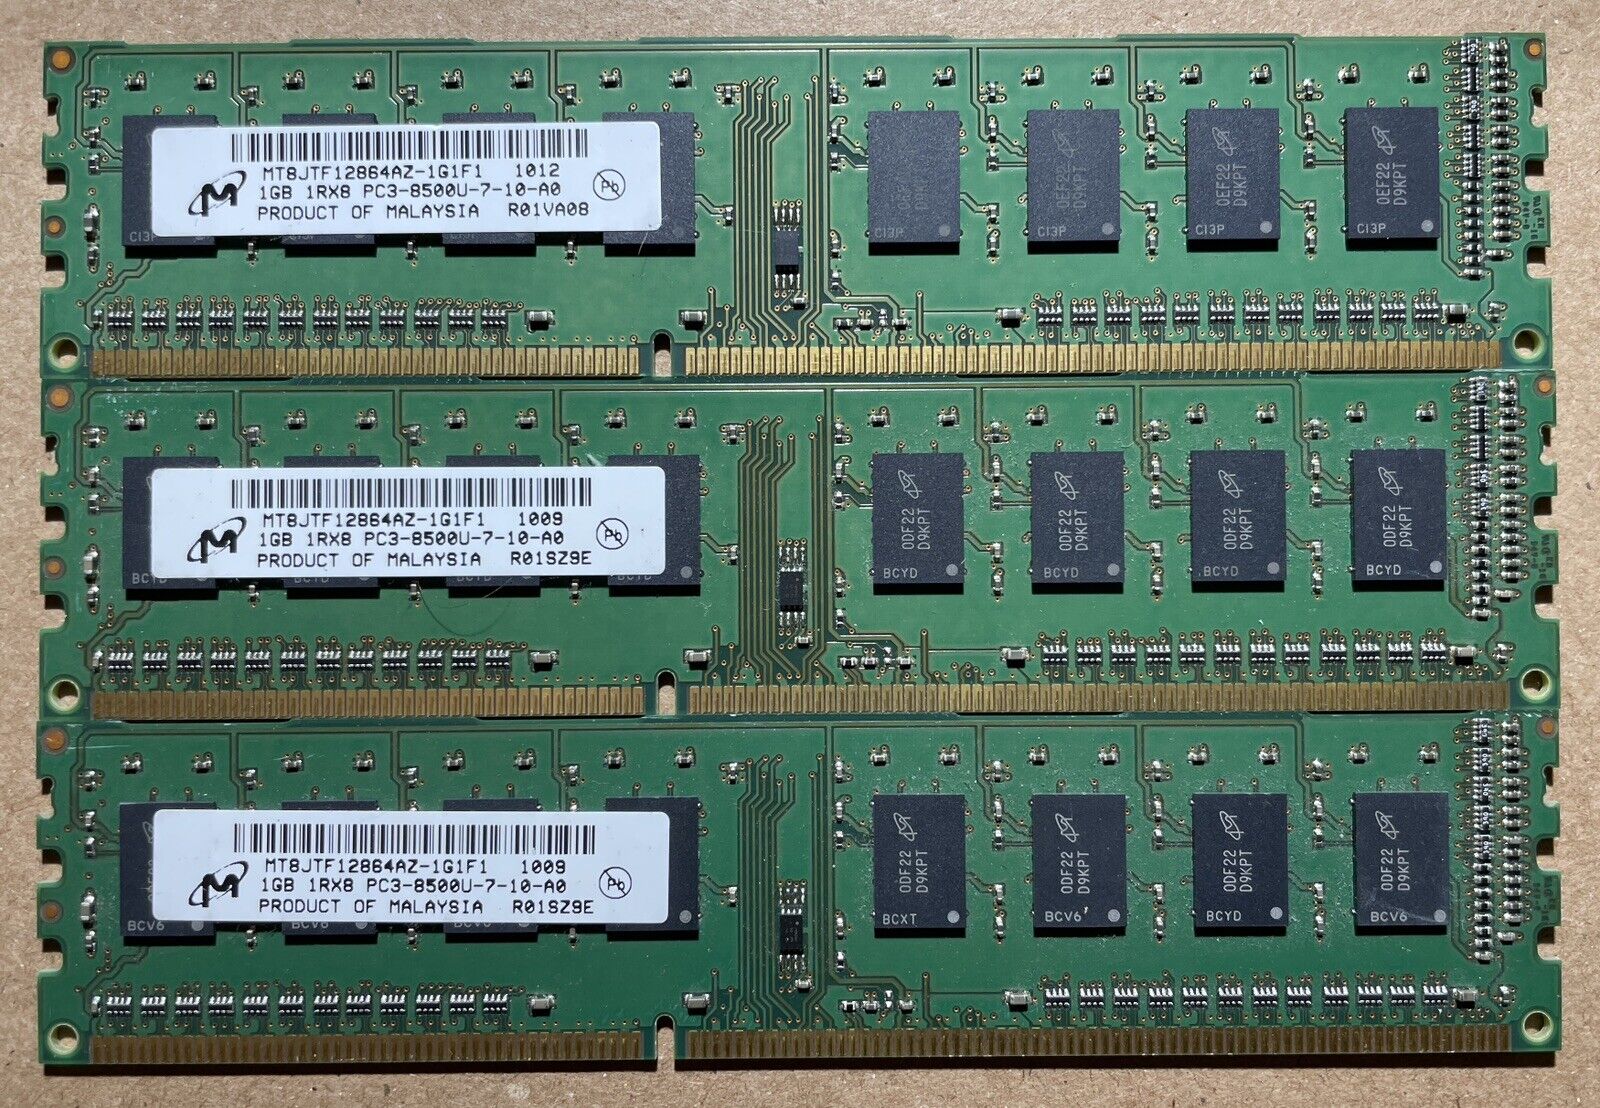 3x MICRON MT8JTF12864AZ-1G1F1 PC3-8500U DDR3 1066 1GB 1Rx8 NON-ECC FOR DESKTOP